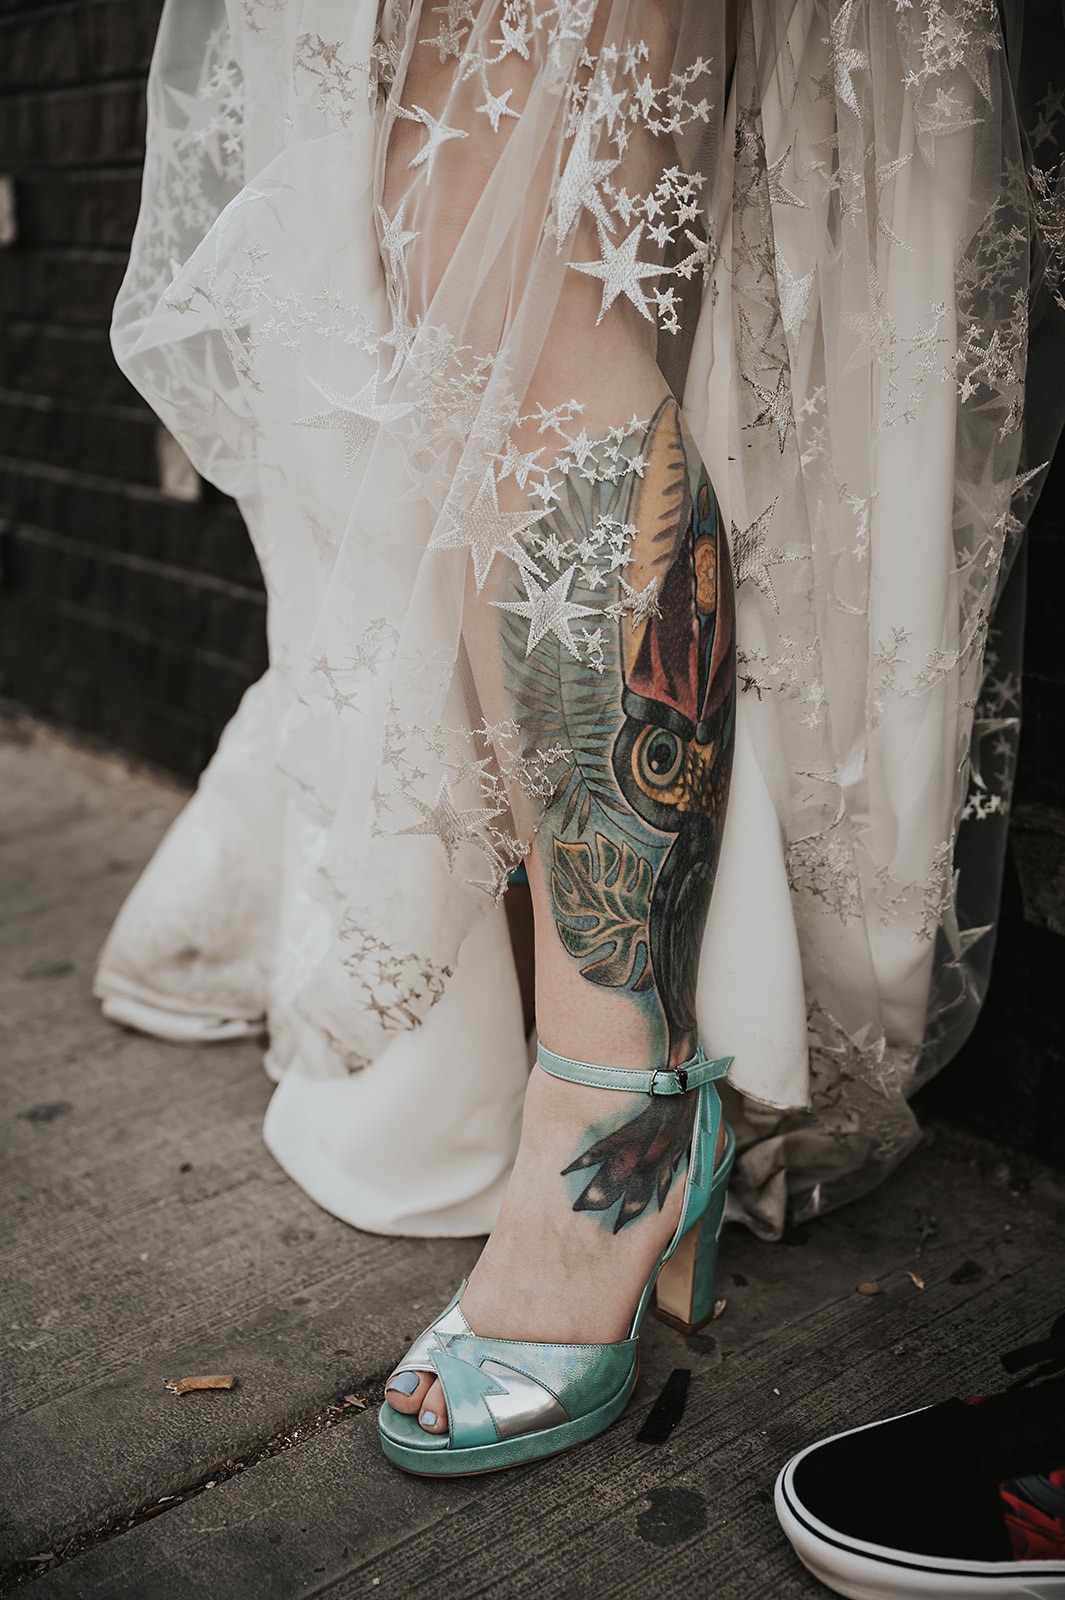 ALternative wedding dress, tattoed bride